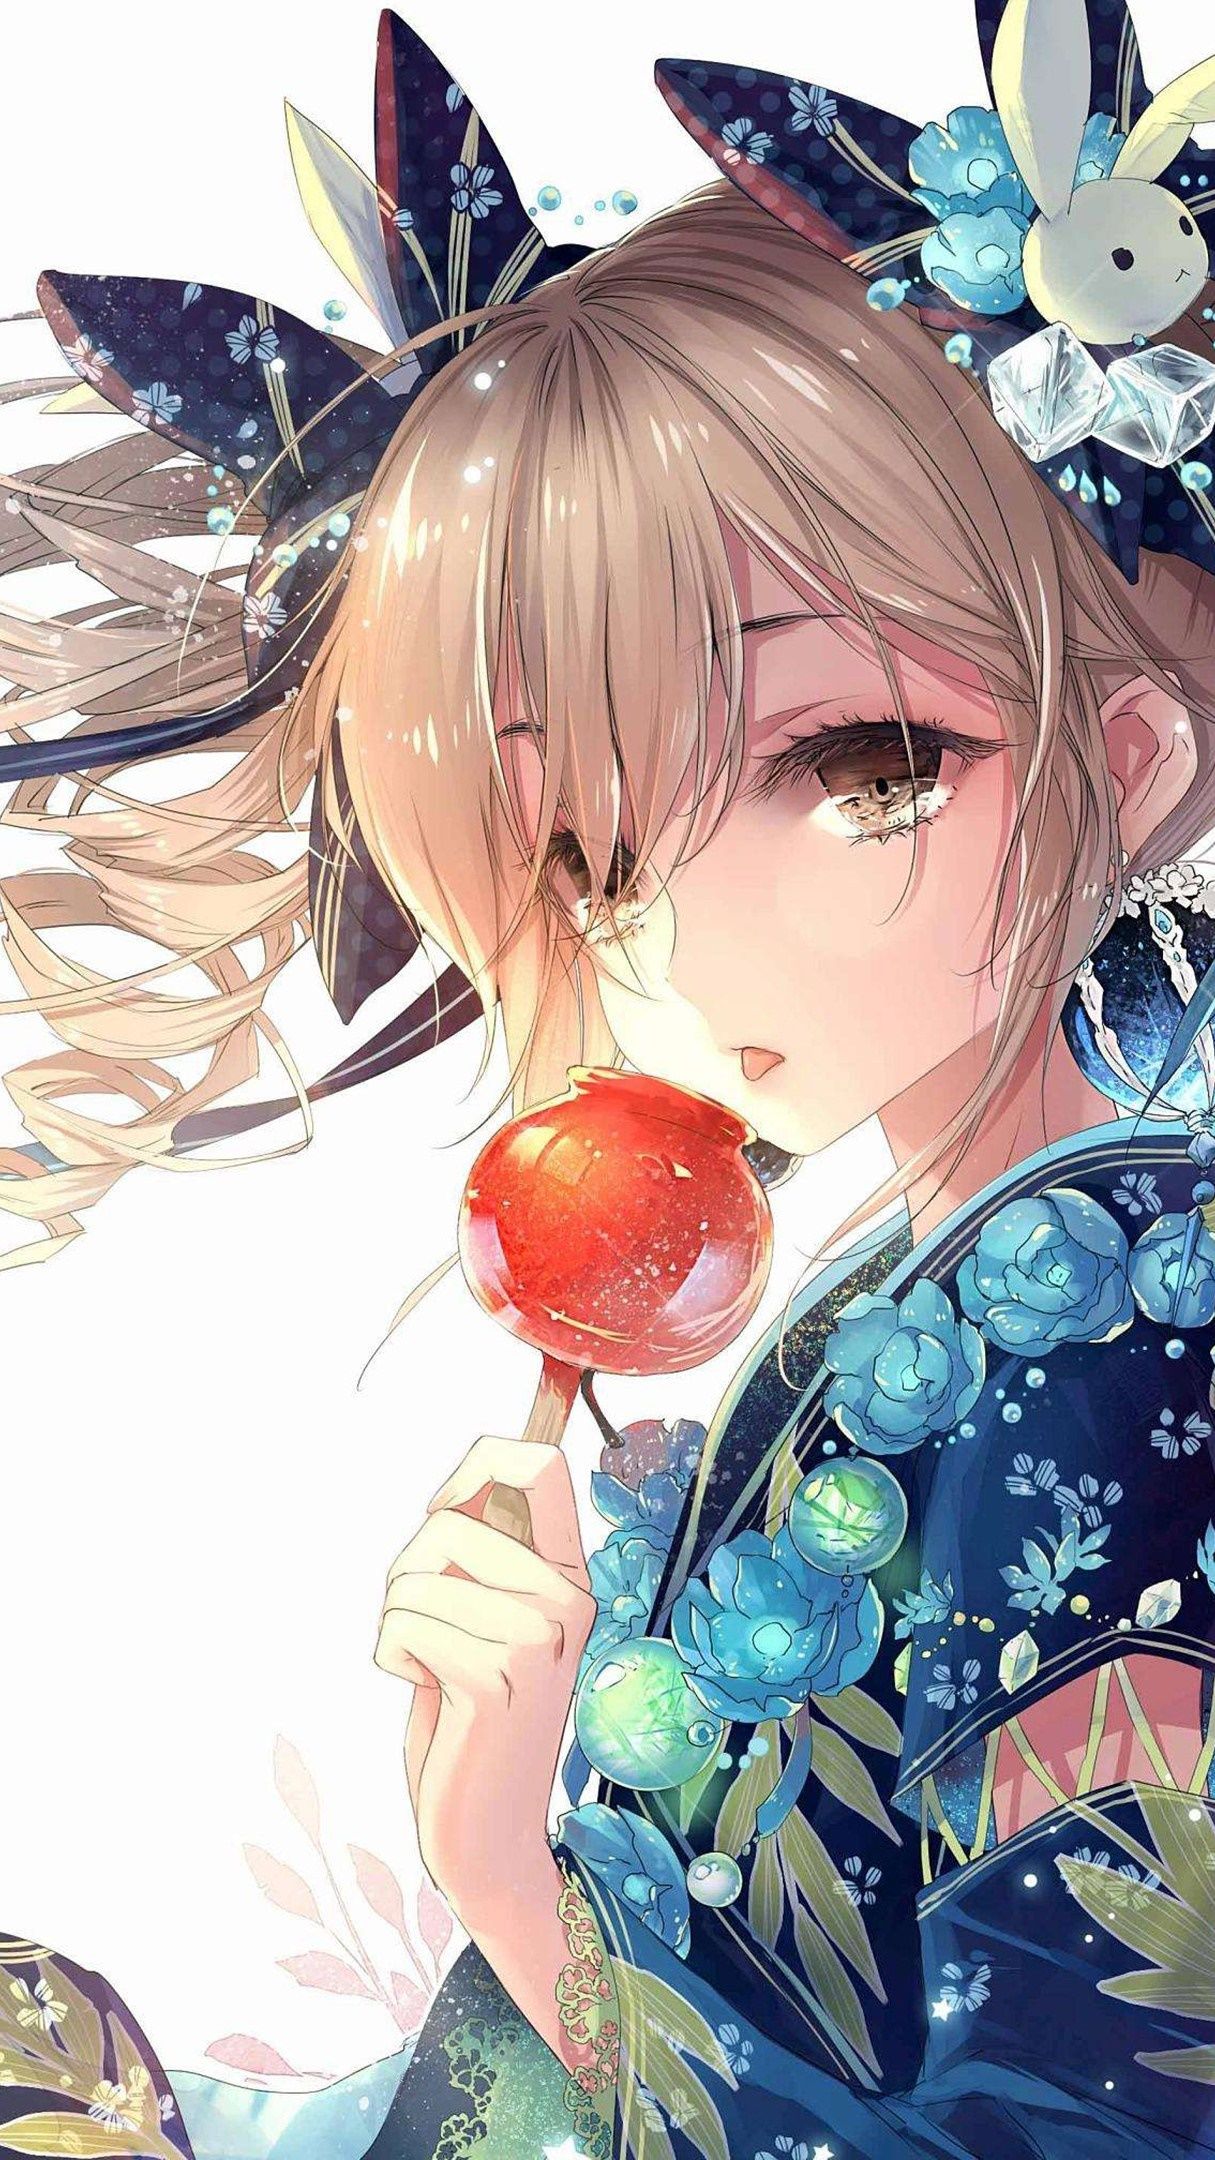 Anime girl in kimono - Japanese Anime art wallpaper - backiee